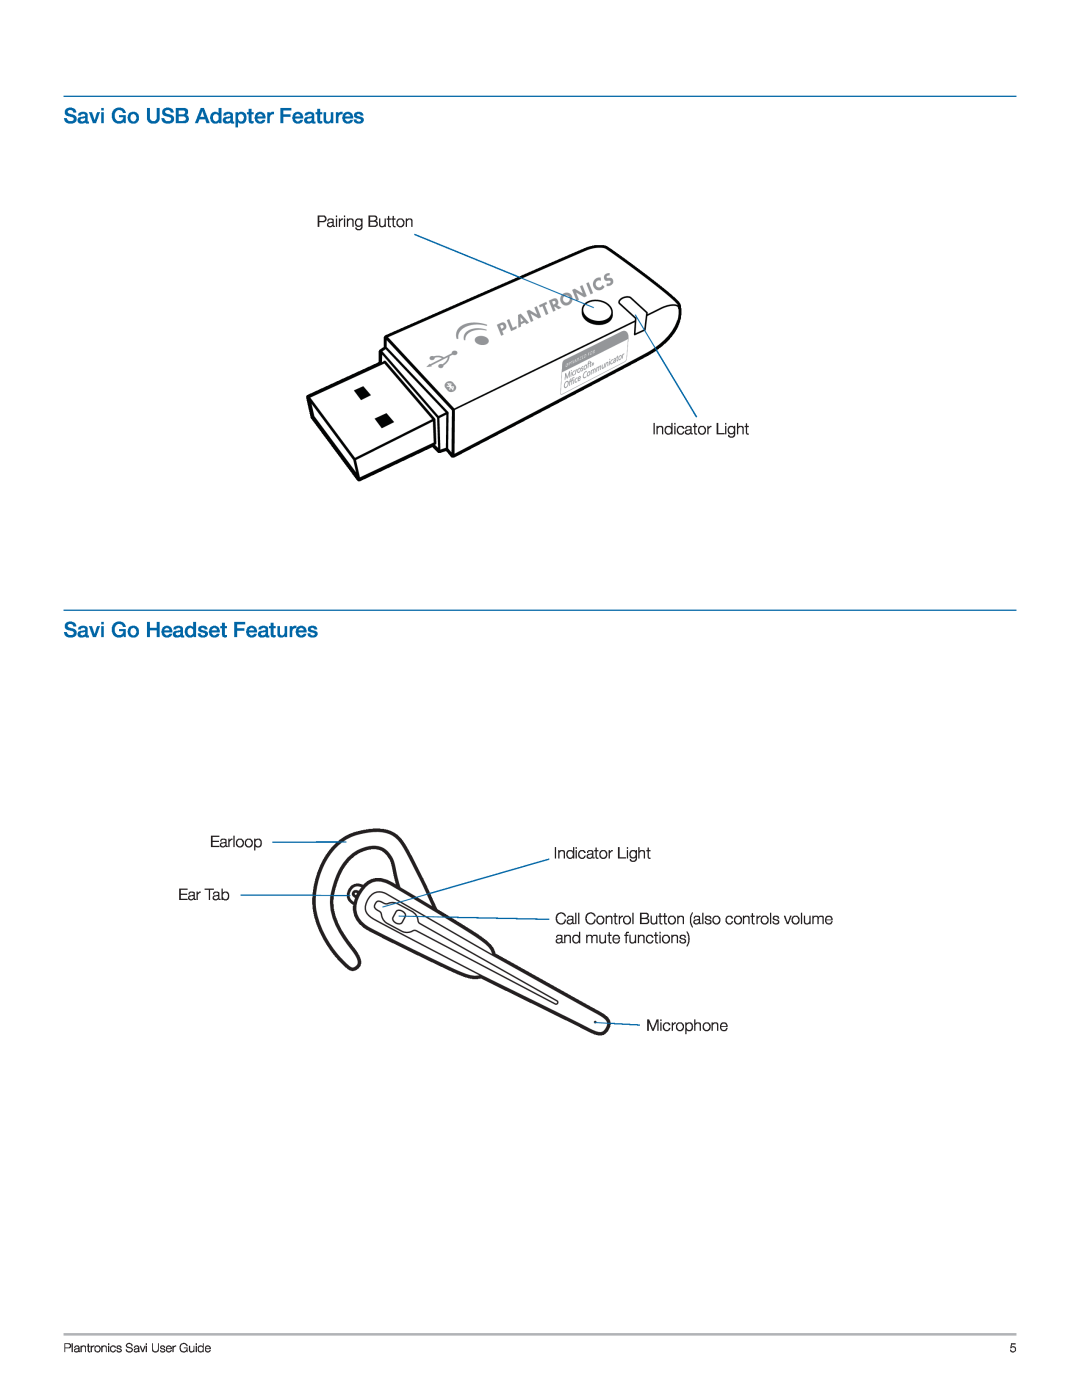 Plantronics WG101/B Savi Go USB Adapter Features, Savi Go Headset Features, Pairing Button Indicator Light, Microphone 